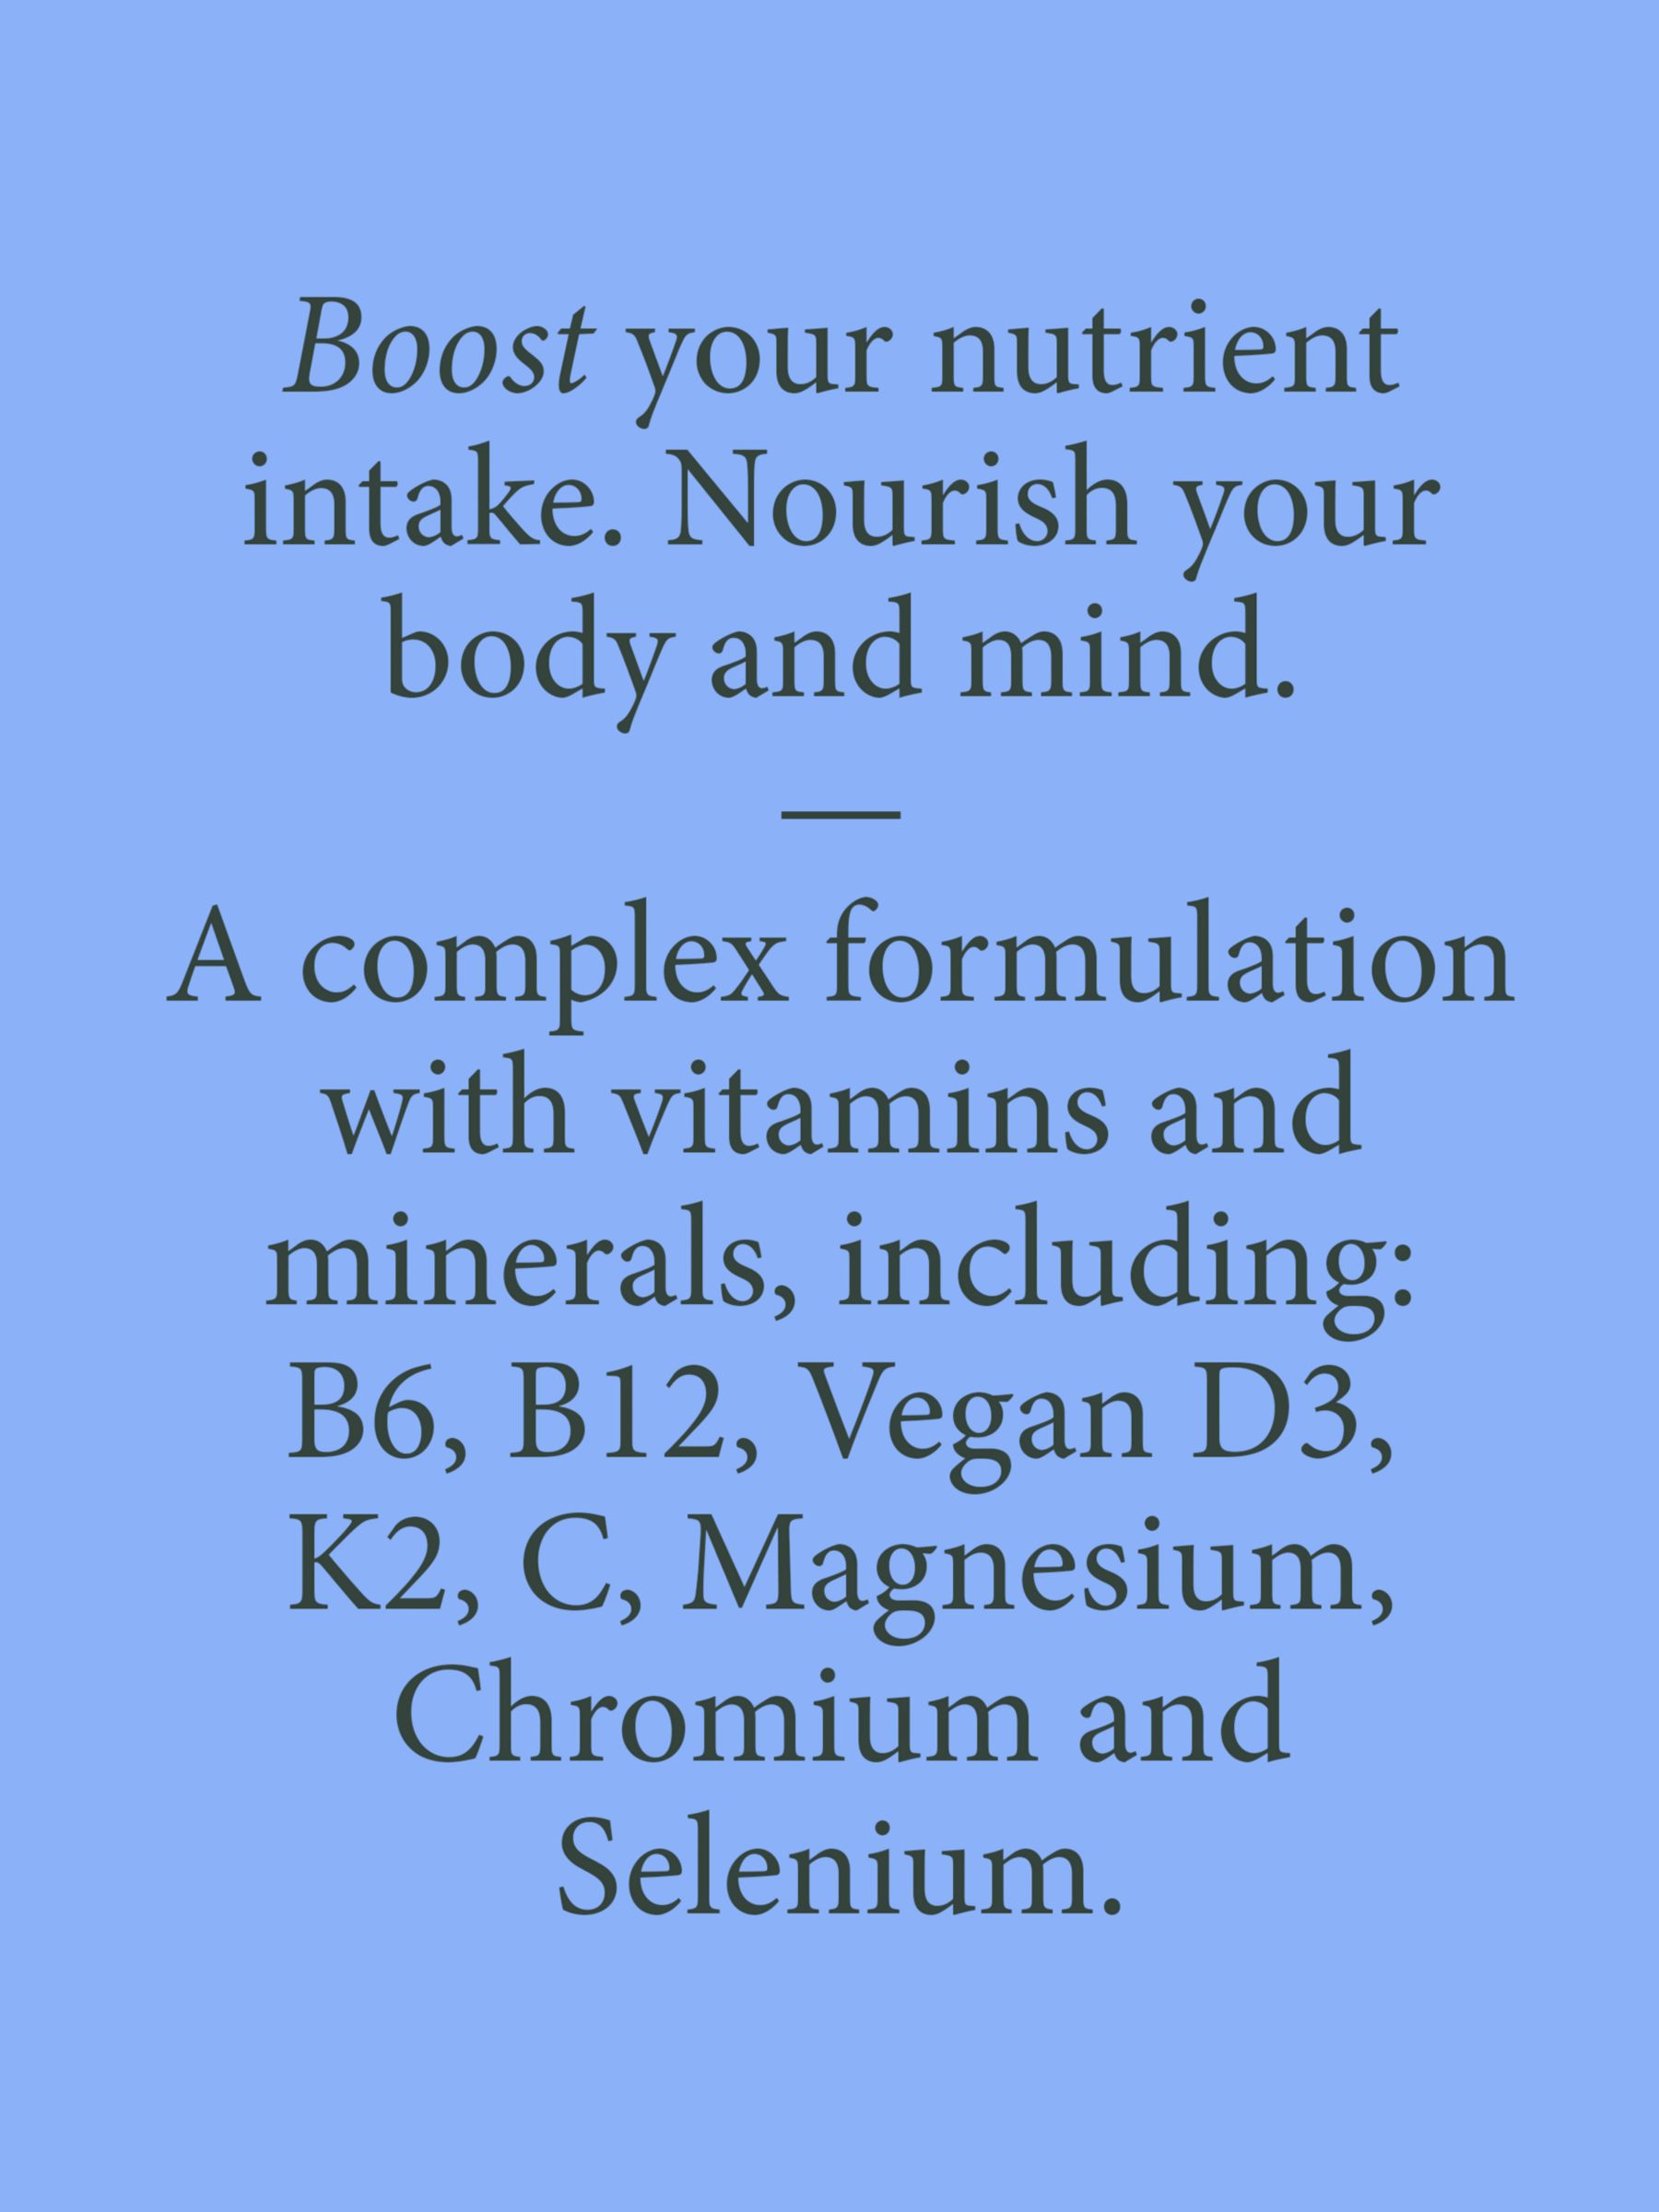 MPowder MENO-BOOST Menopause Supplement, 30 servings